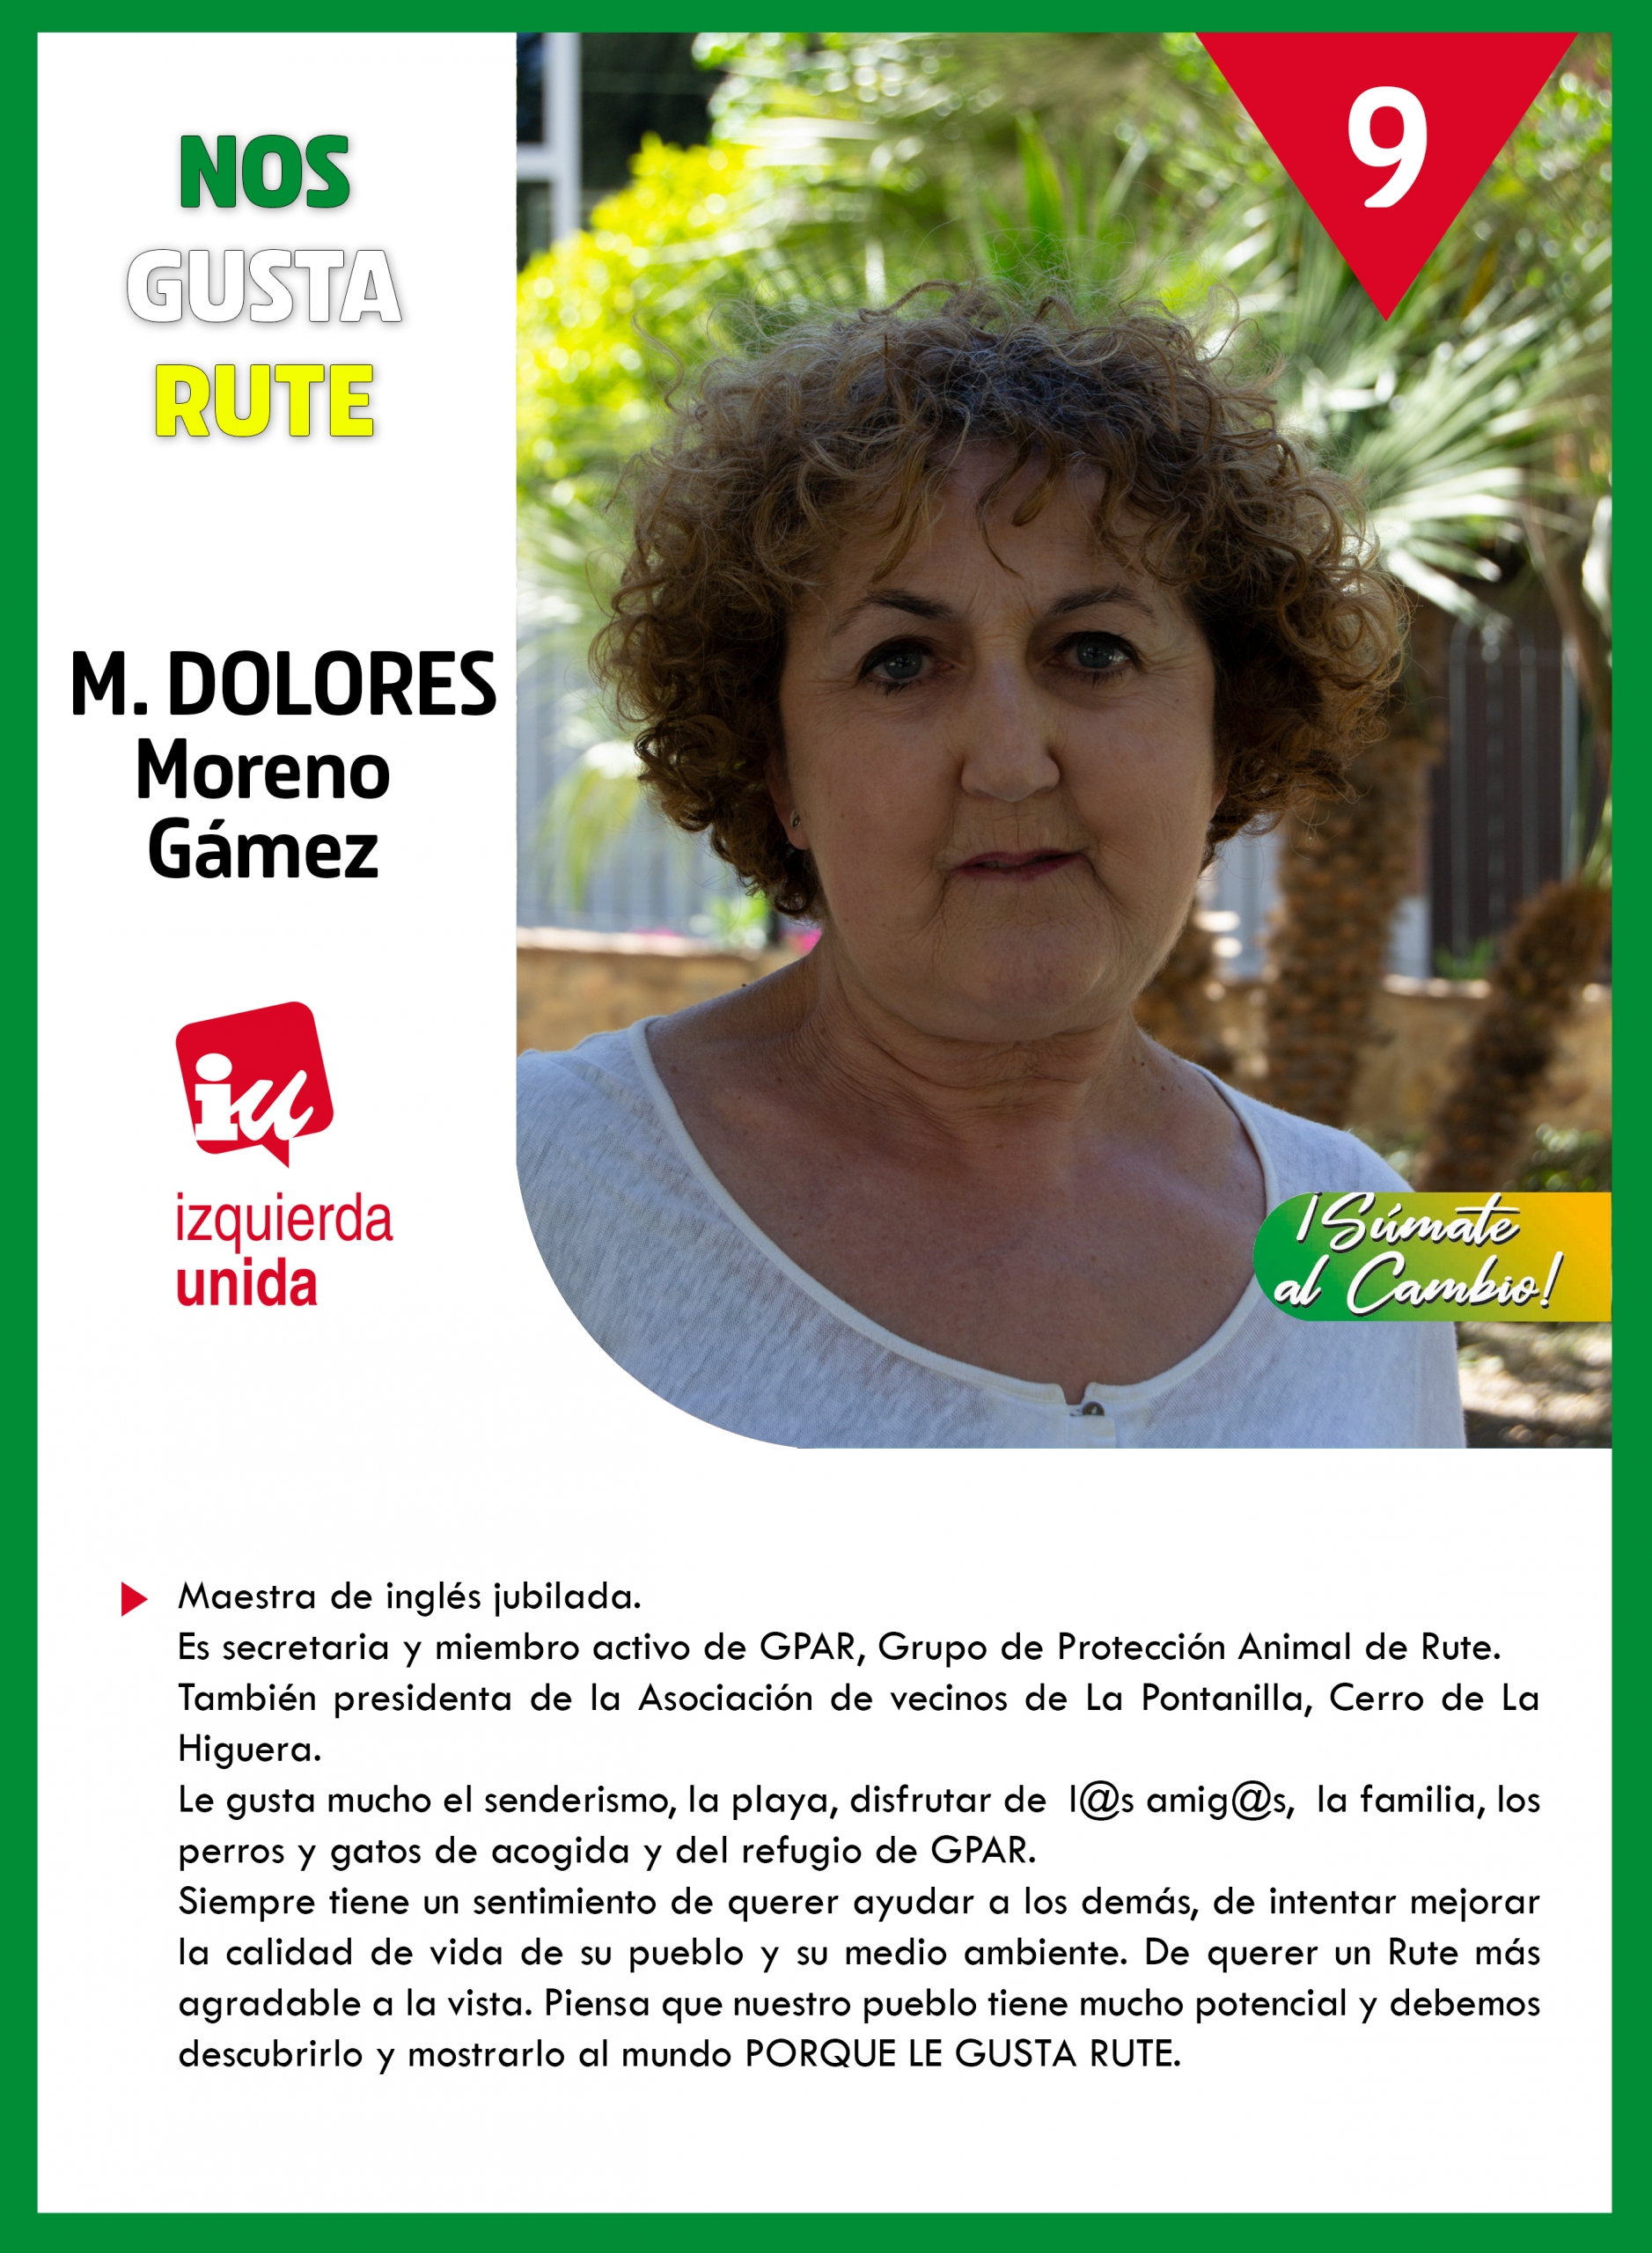 Mª Dolores Moreno Gámez